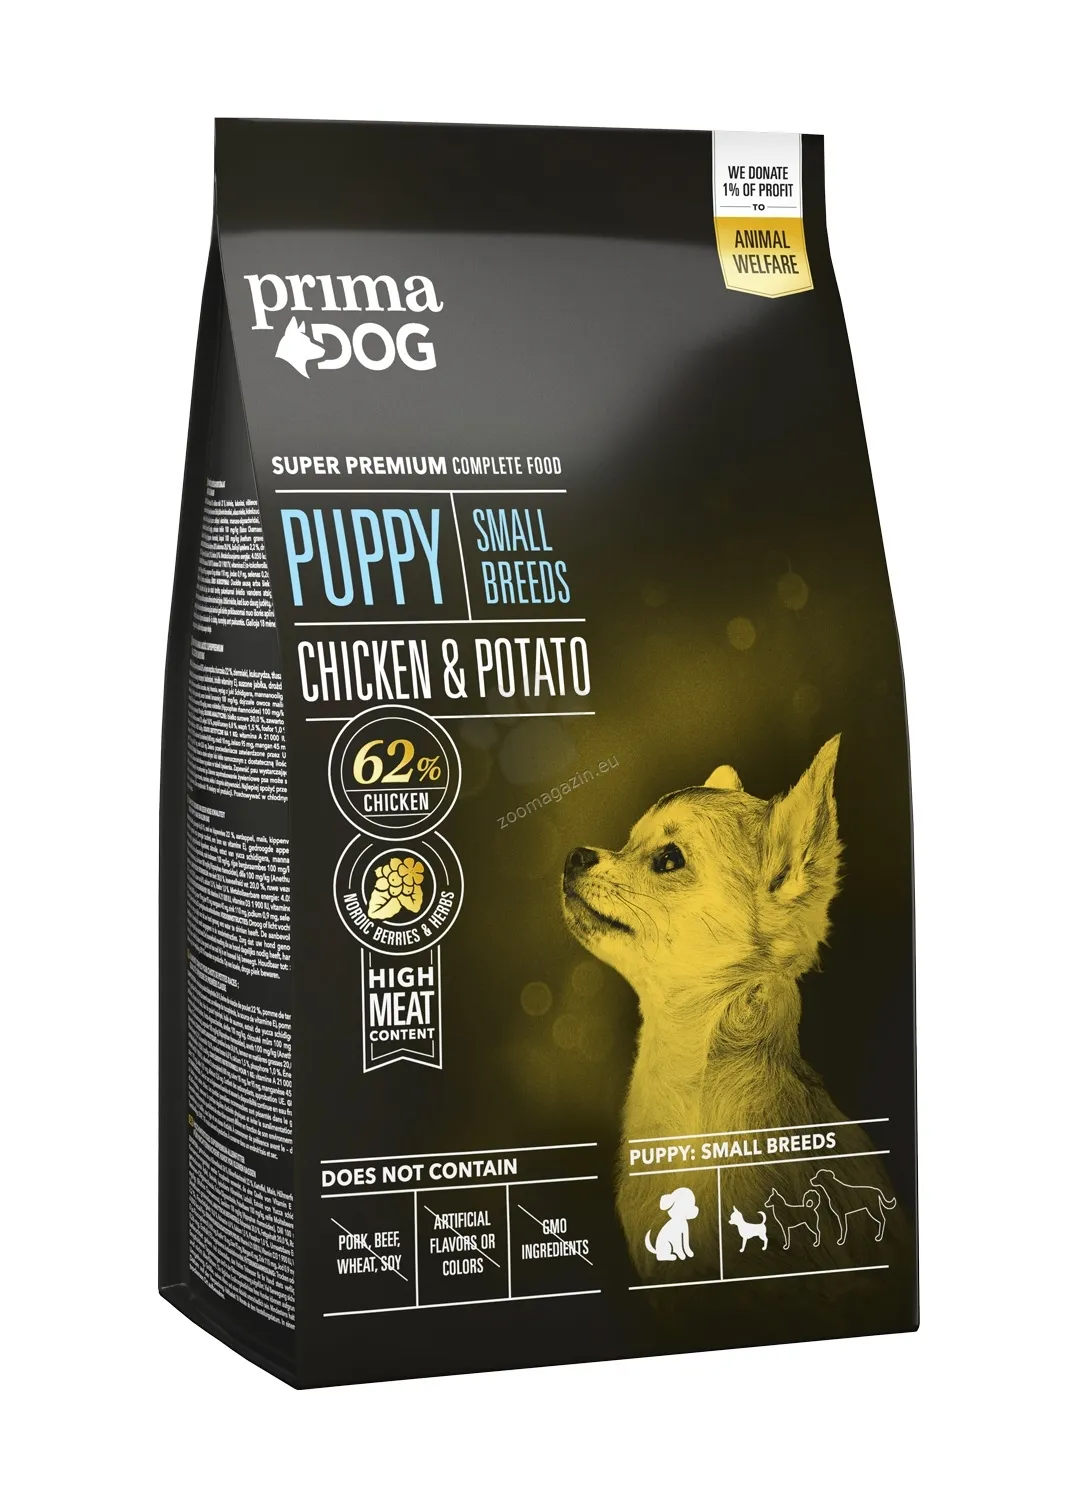 Prima Dog Puppy Small Breeds Chicken & Potato - пълноценна храна с пилешко и картофи за малки кучета / 1-10 кг. /, до 12 месеца/ - 2кг.